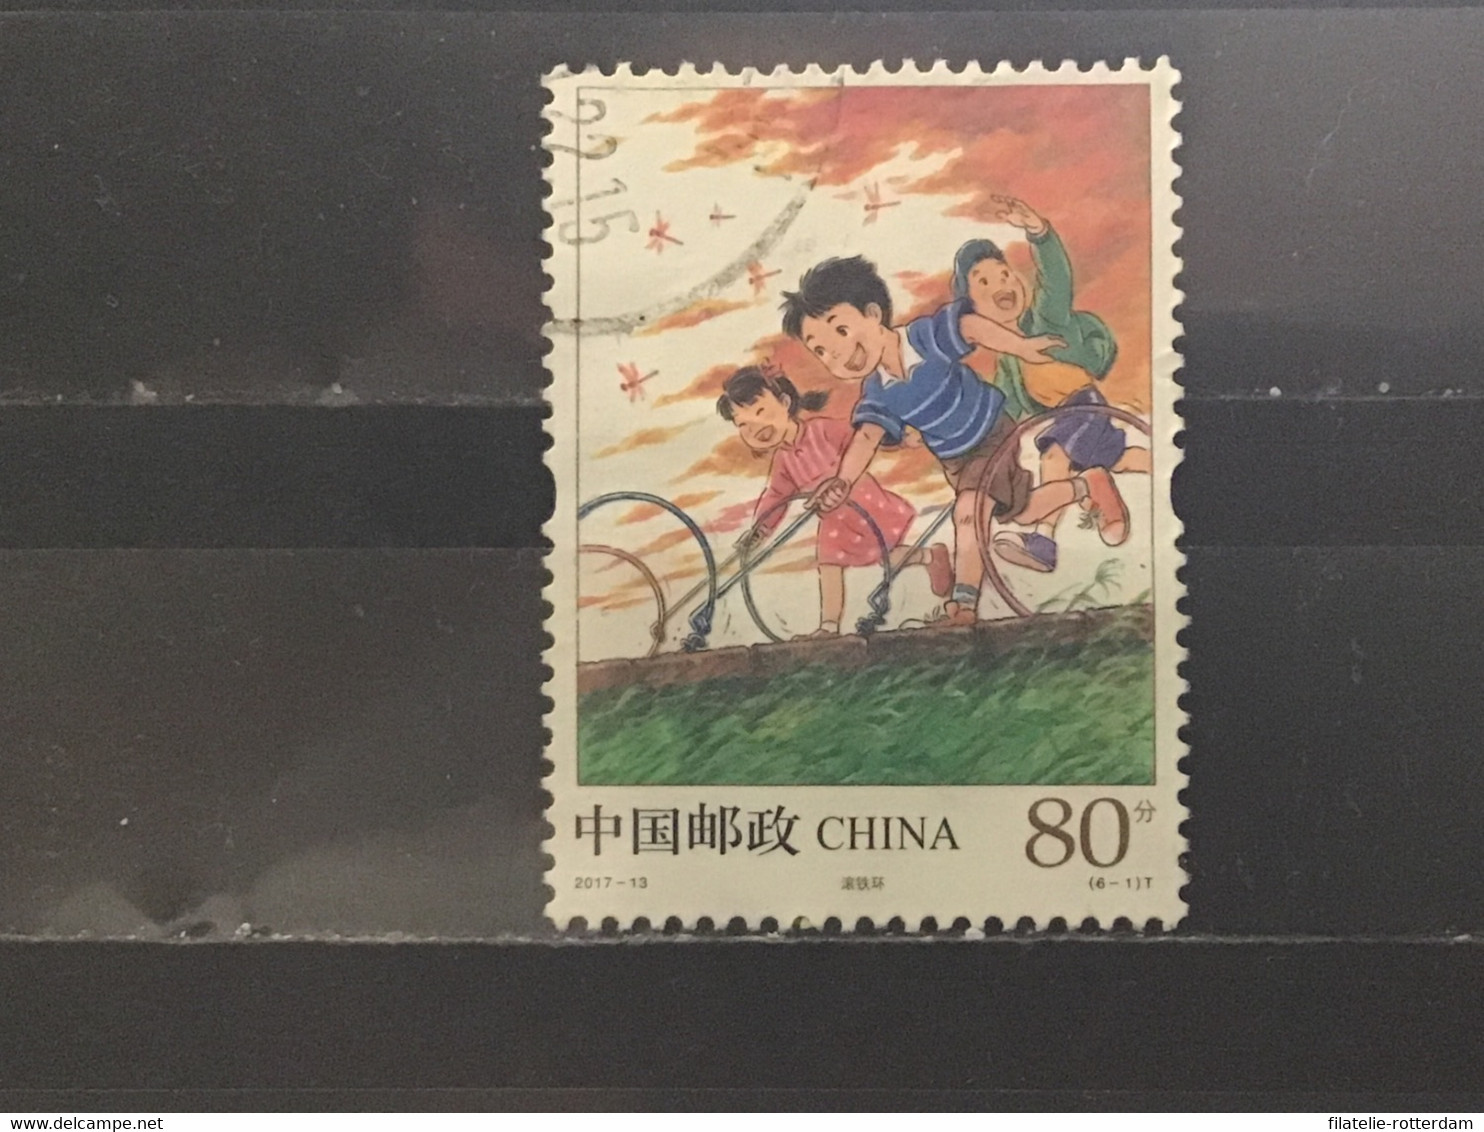 China - Kinderspelen (80) 2017 - Usados